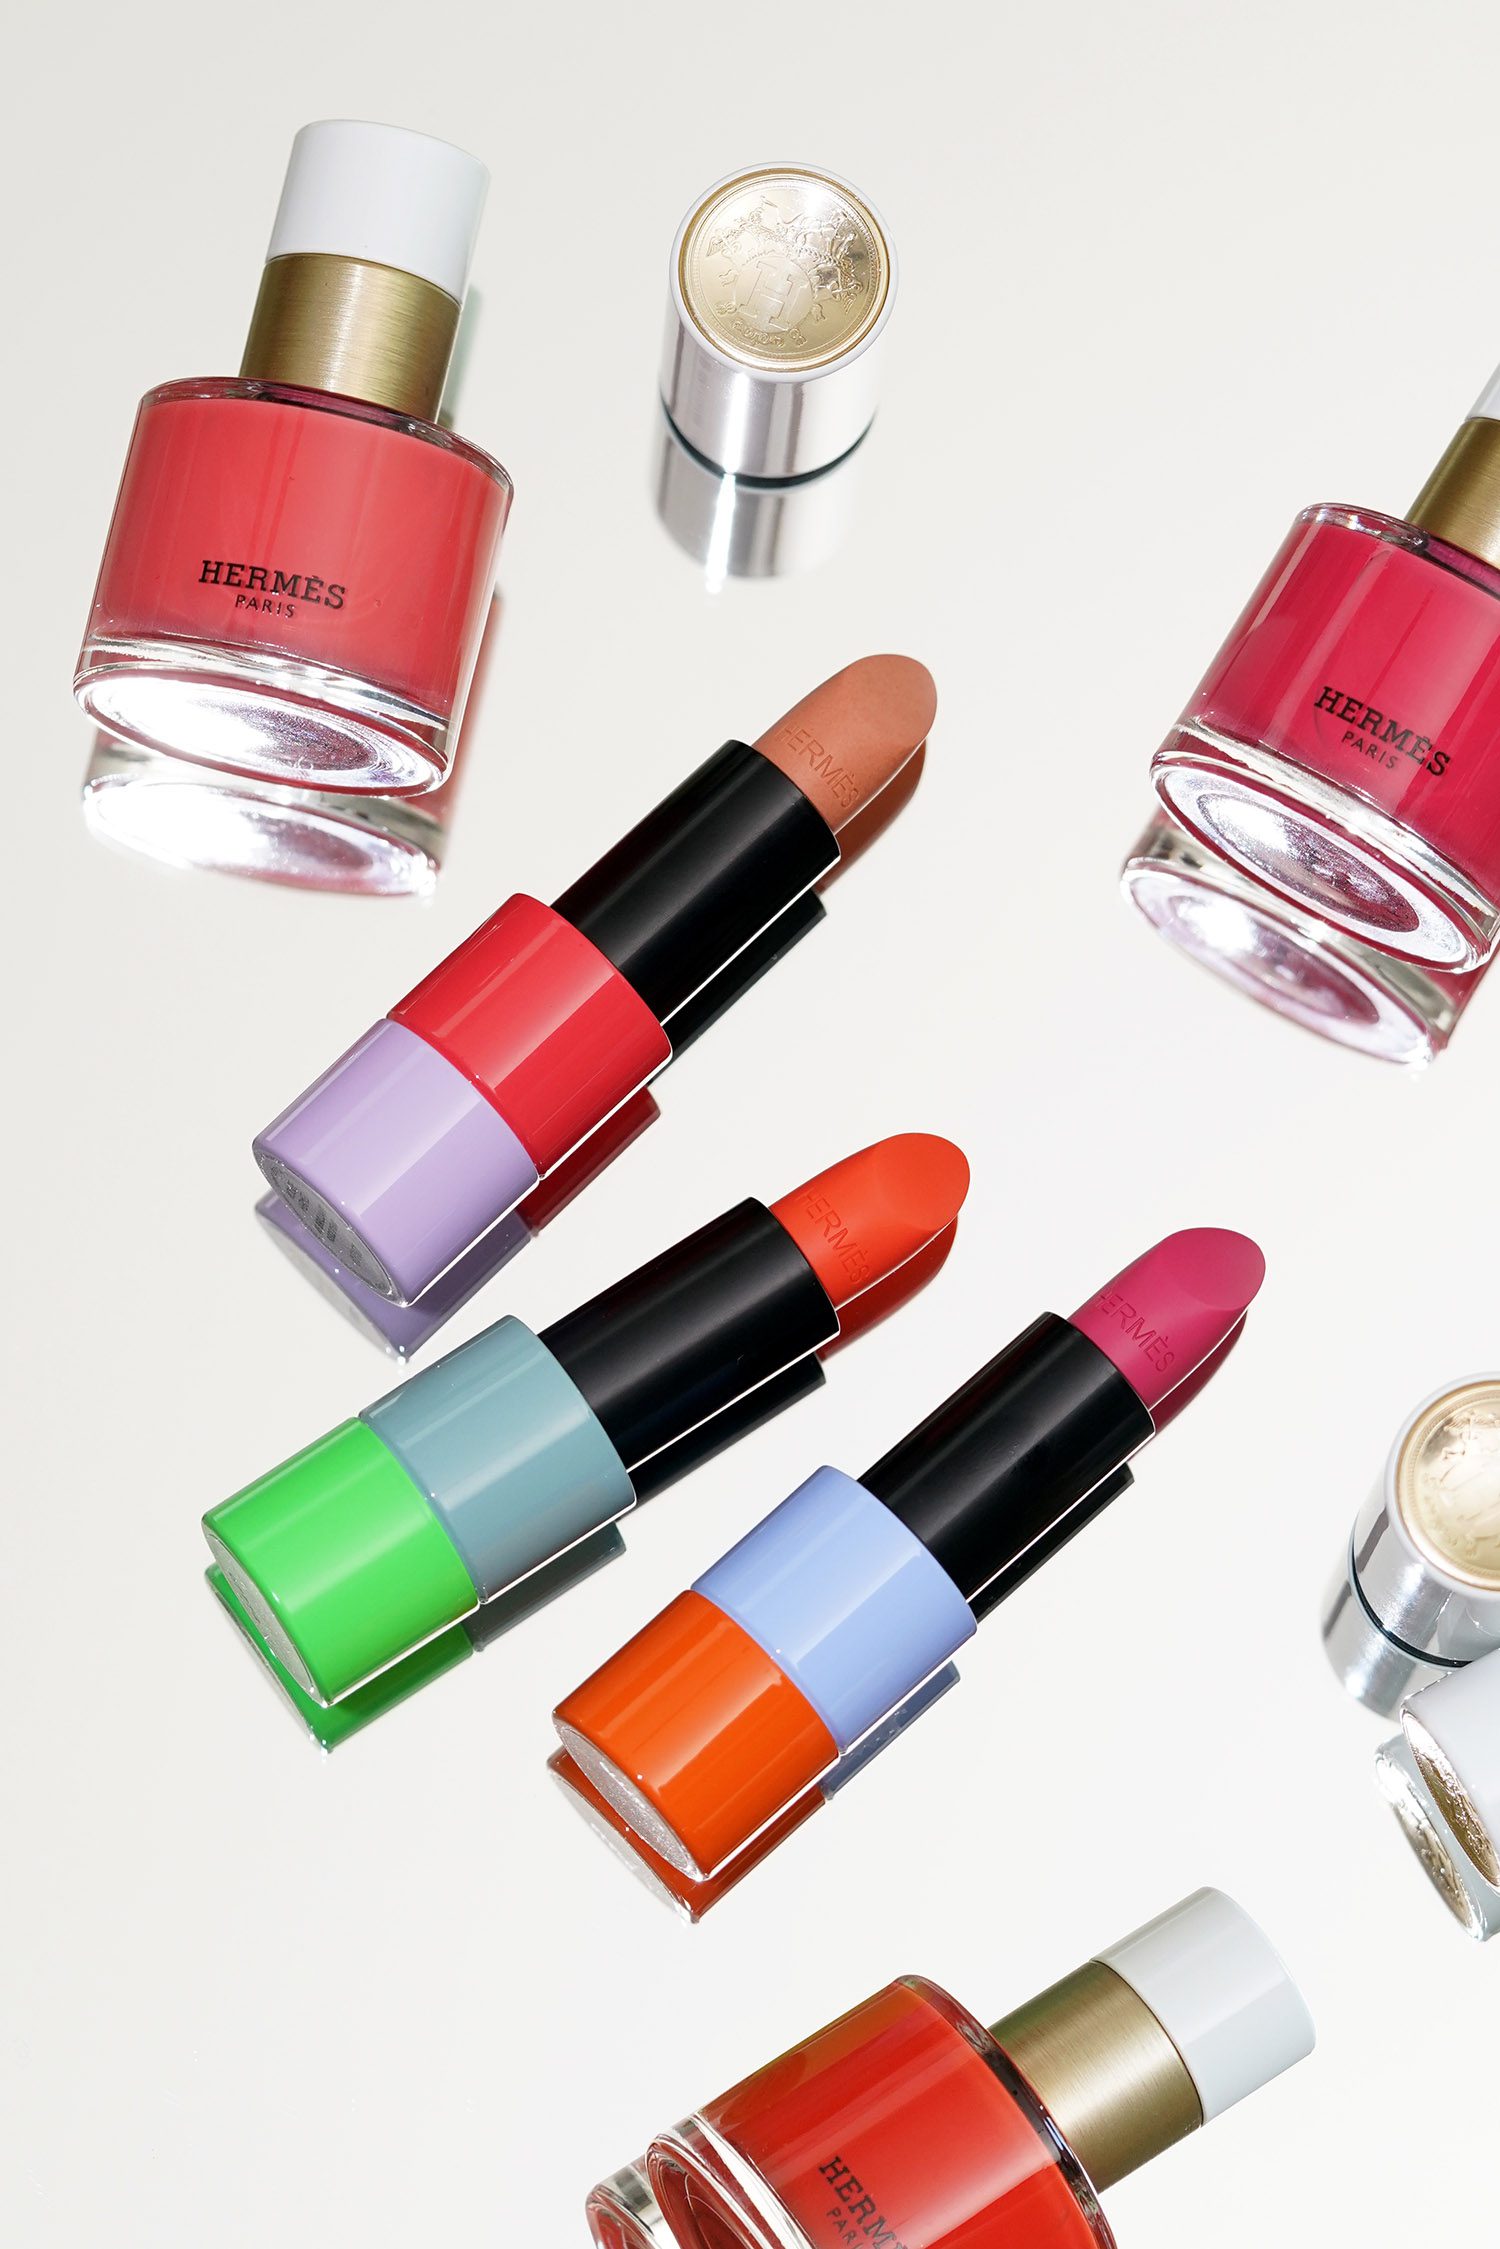 Shop Hermès' Latest Collection of Lipsticks